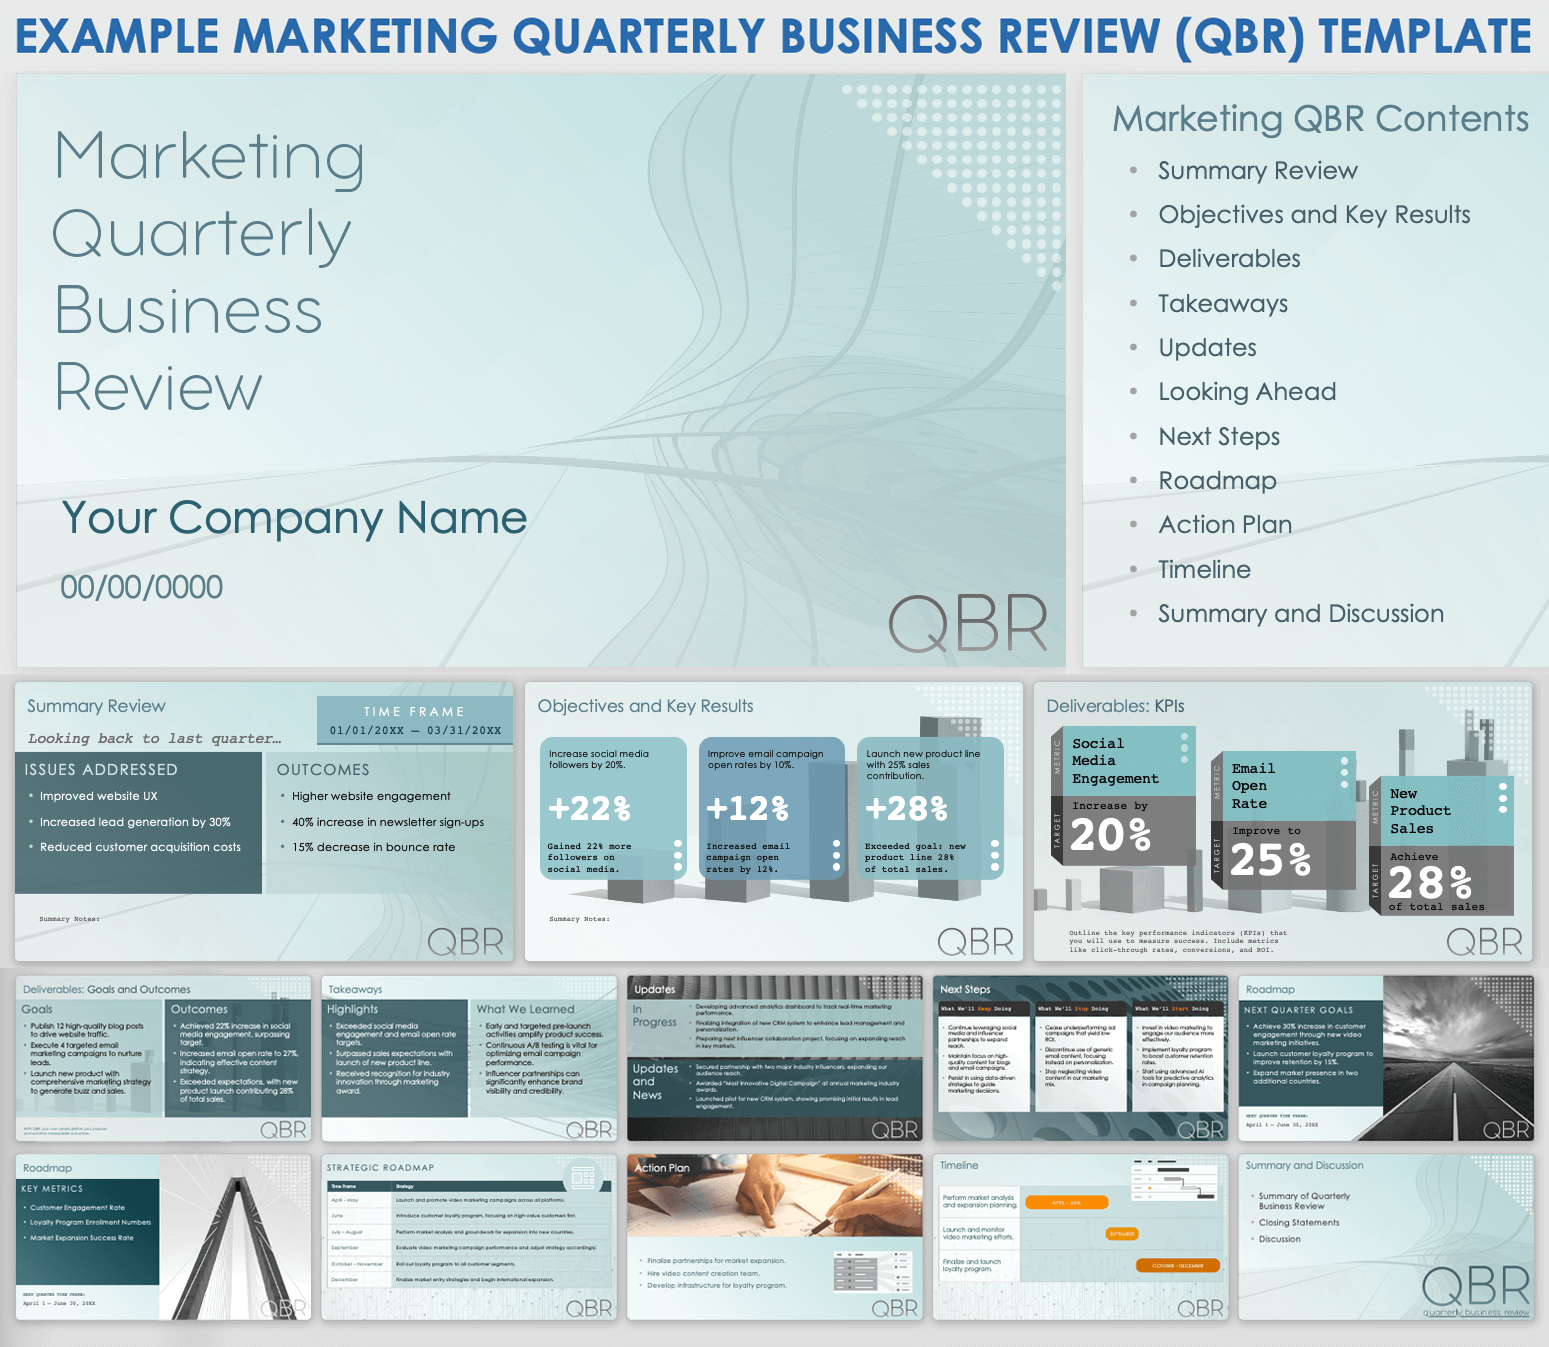 Marketing Quarterly Business Review QBR Template